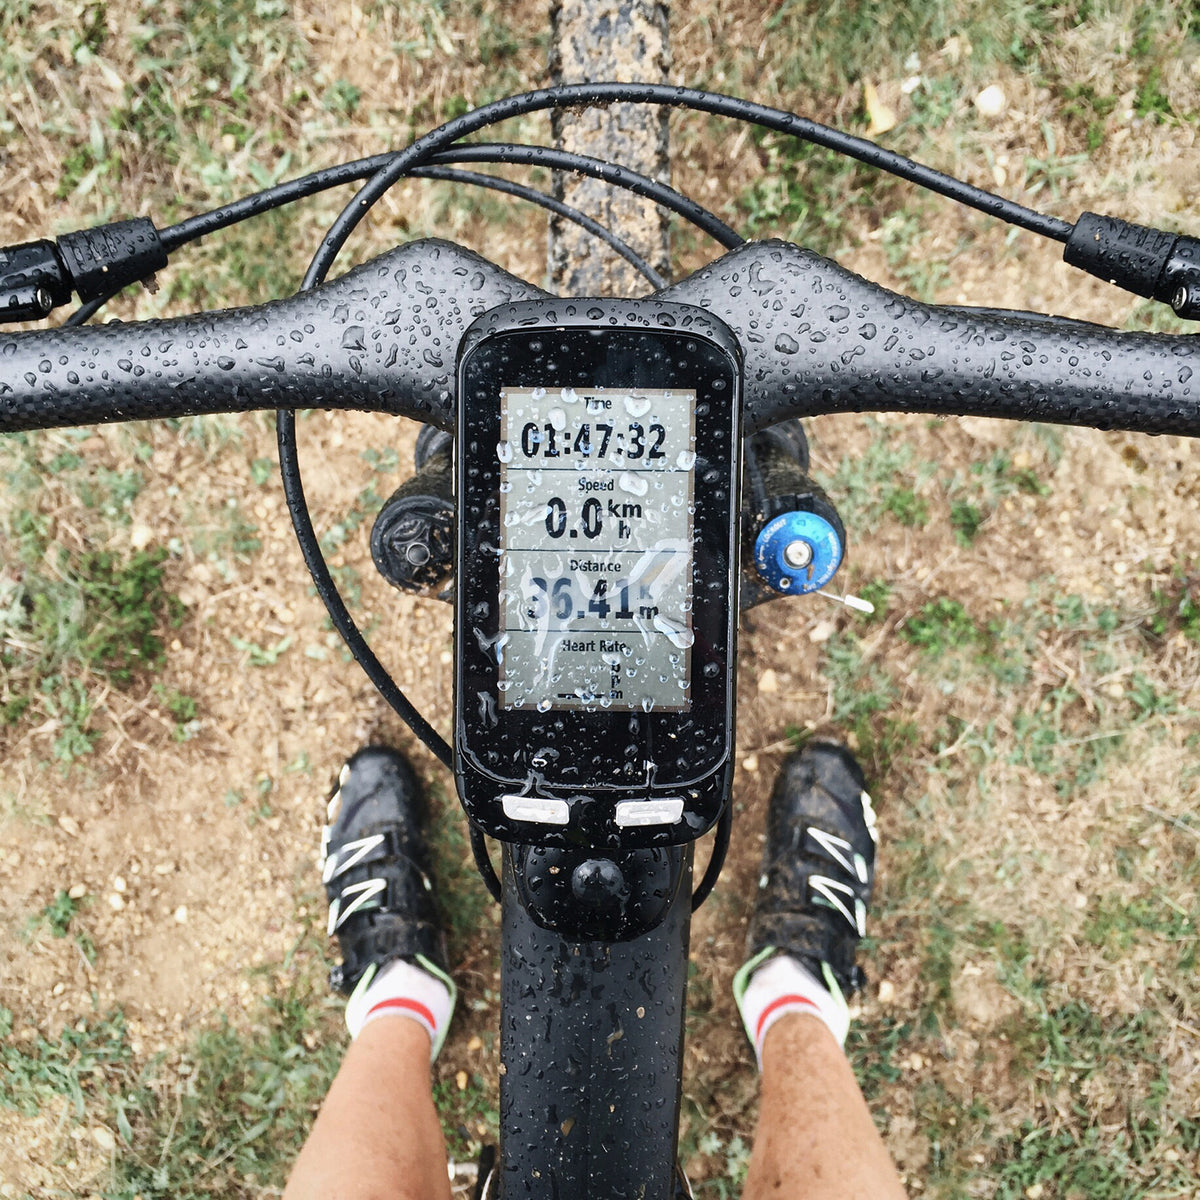 Cómo elegir tu contador GPS de bicicleta? : The Cyclist House